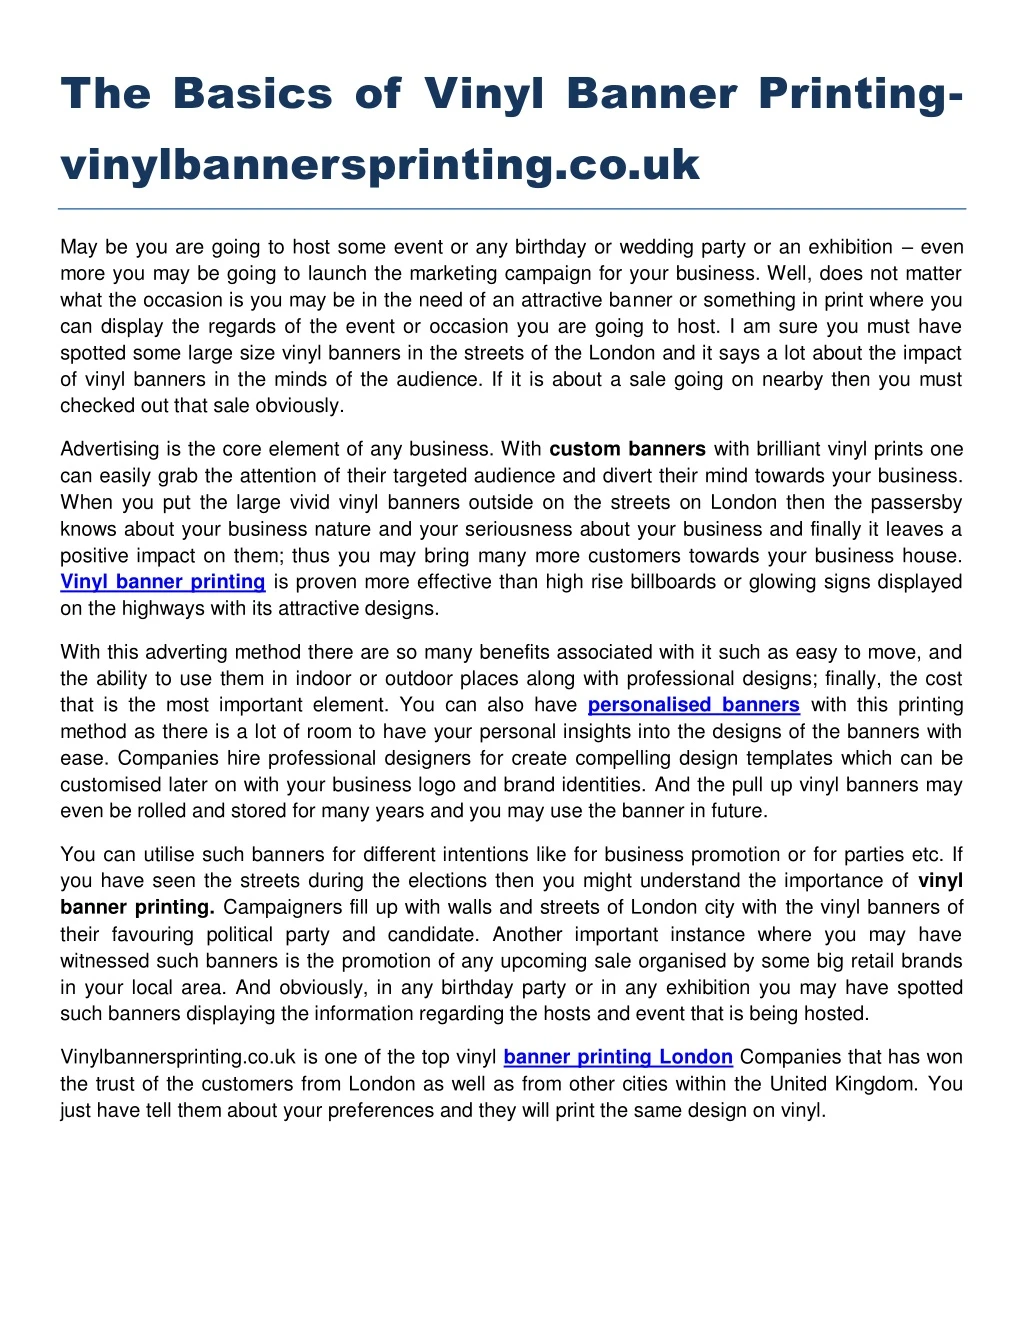 the basics of vinyl banner printing